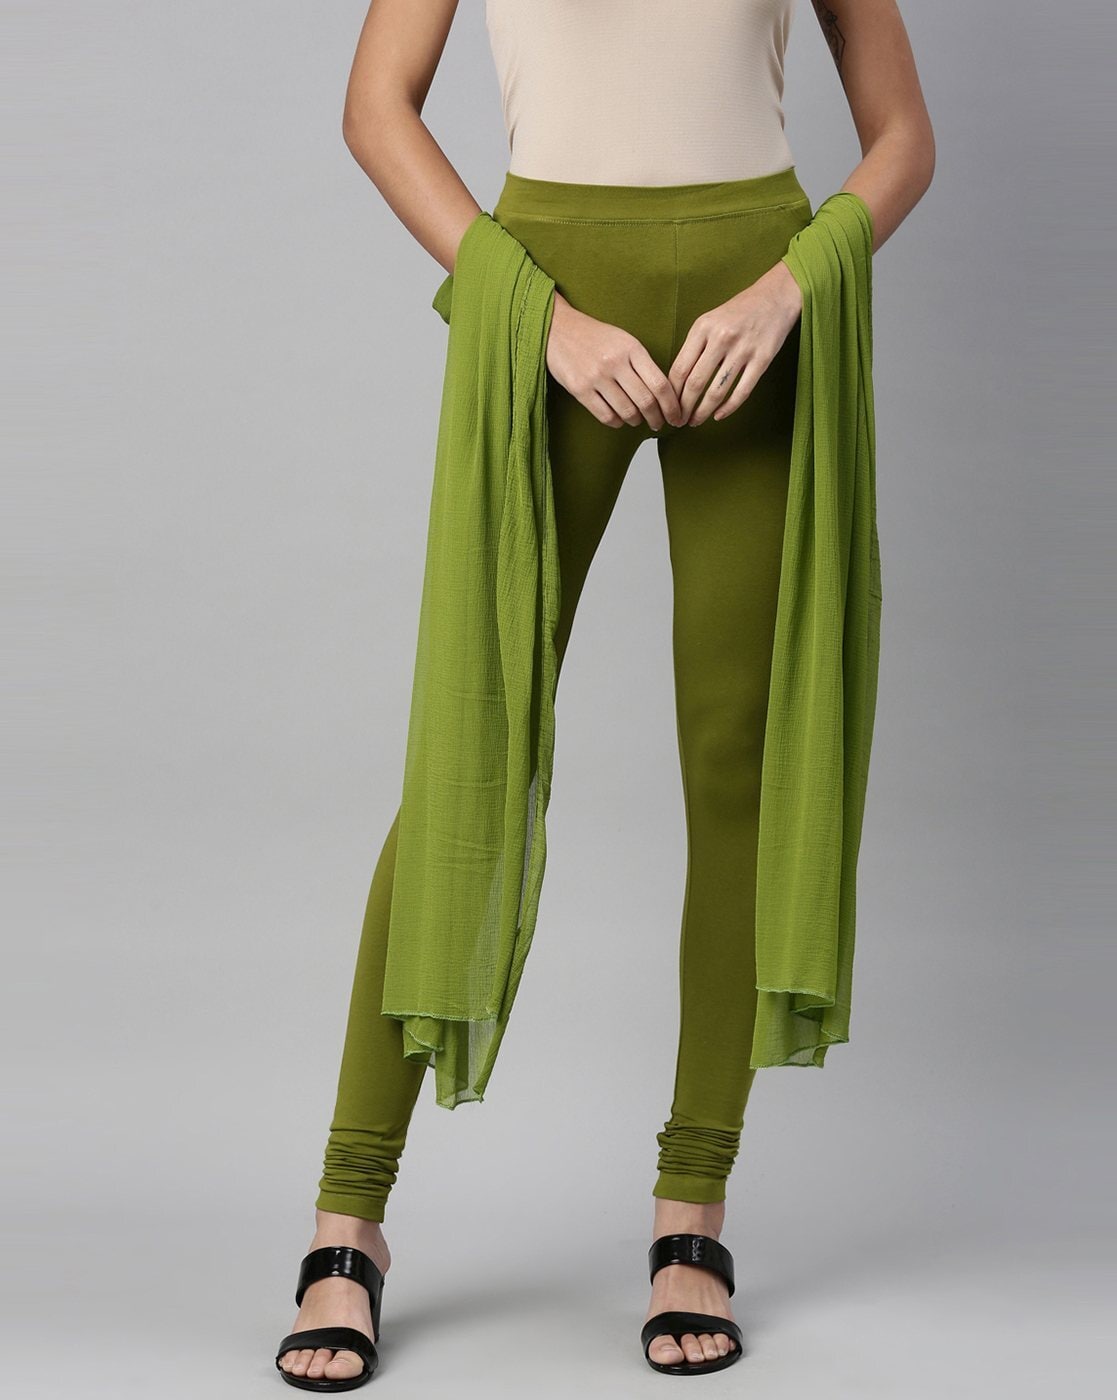 GetUSCart- Colorfulkoala Women's High Waisted Pattern Leggings Full-Length  Yoga Pants (XS, Army Green Splinter Camo)